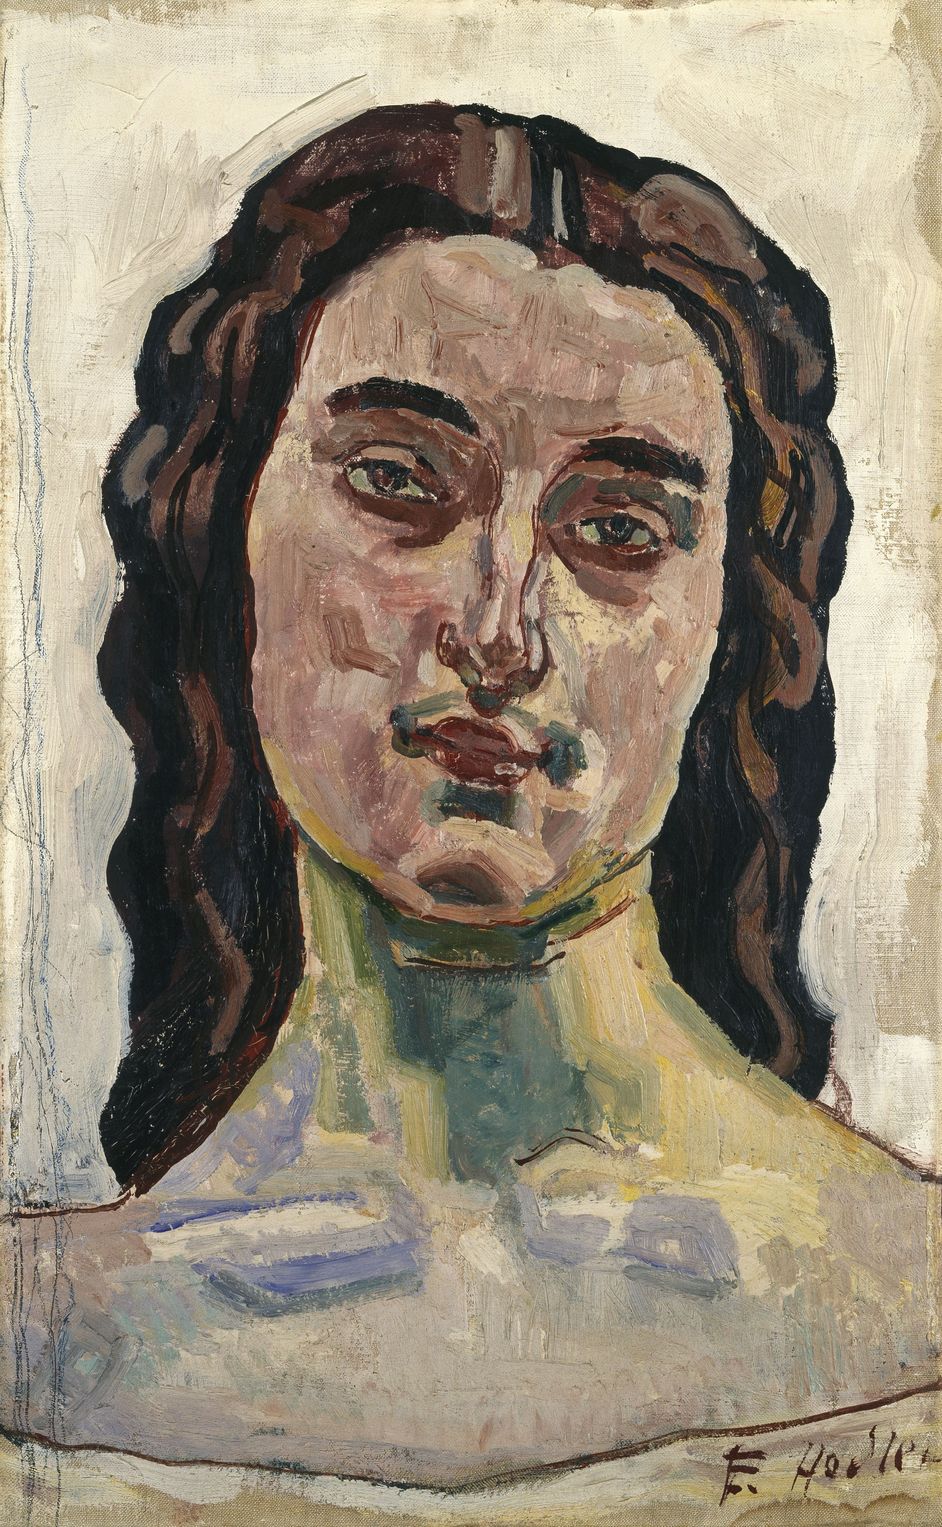 Oil on canvas, 47 × 29 cm